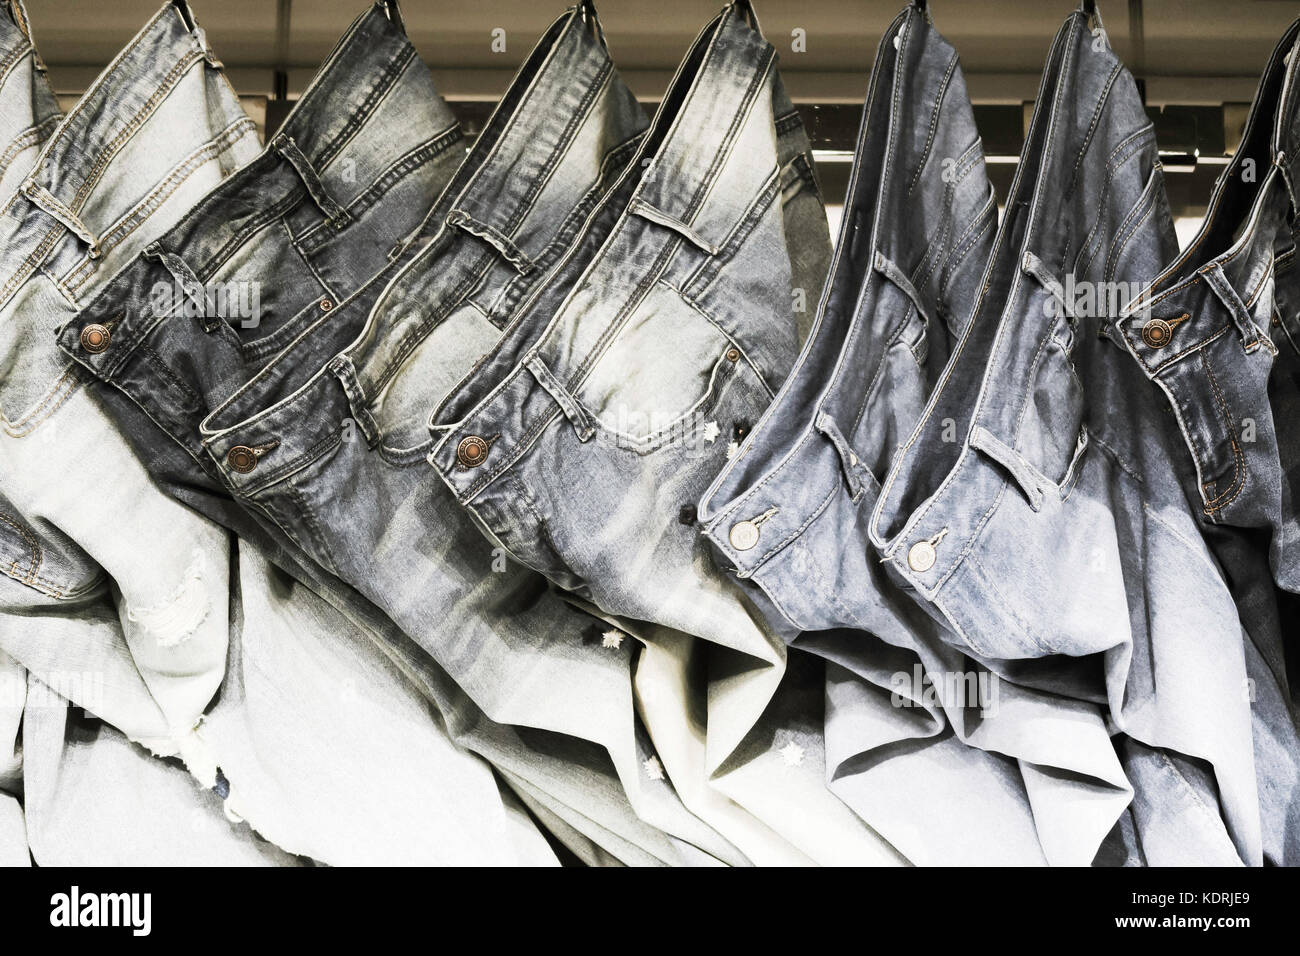 Denim Jeans Display, USA Stock Photo - Alamy